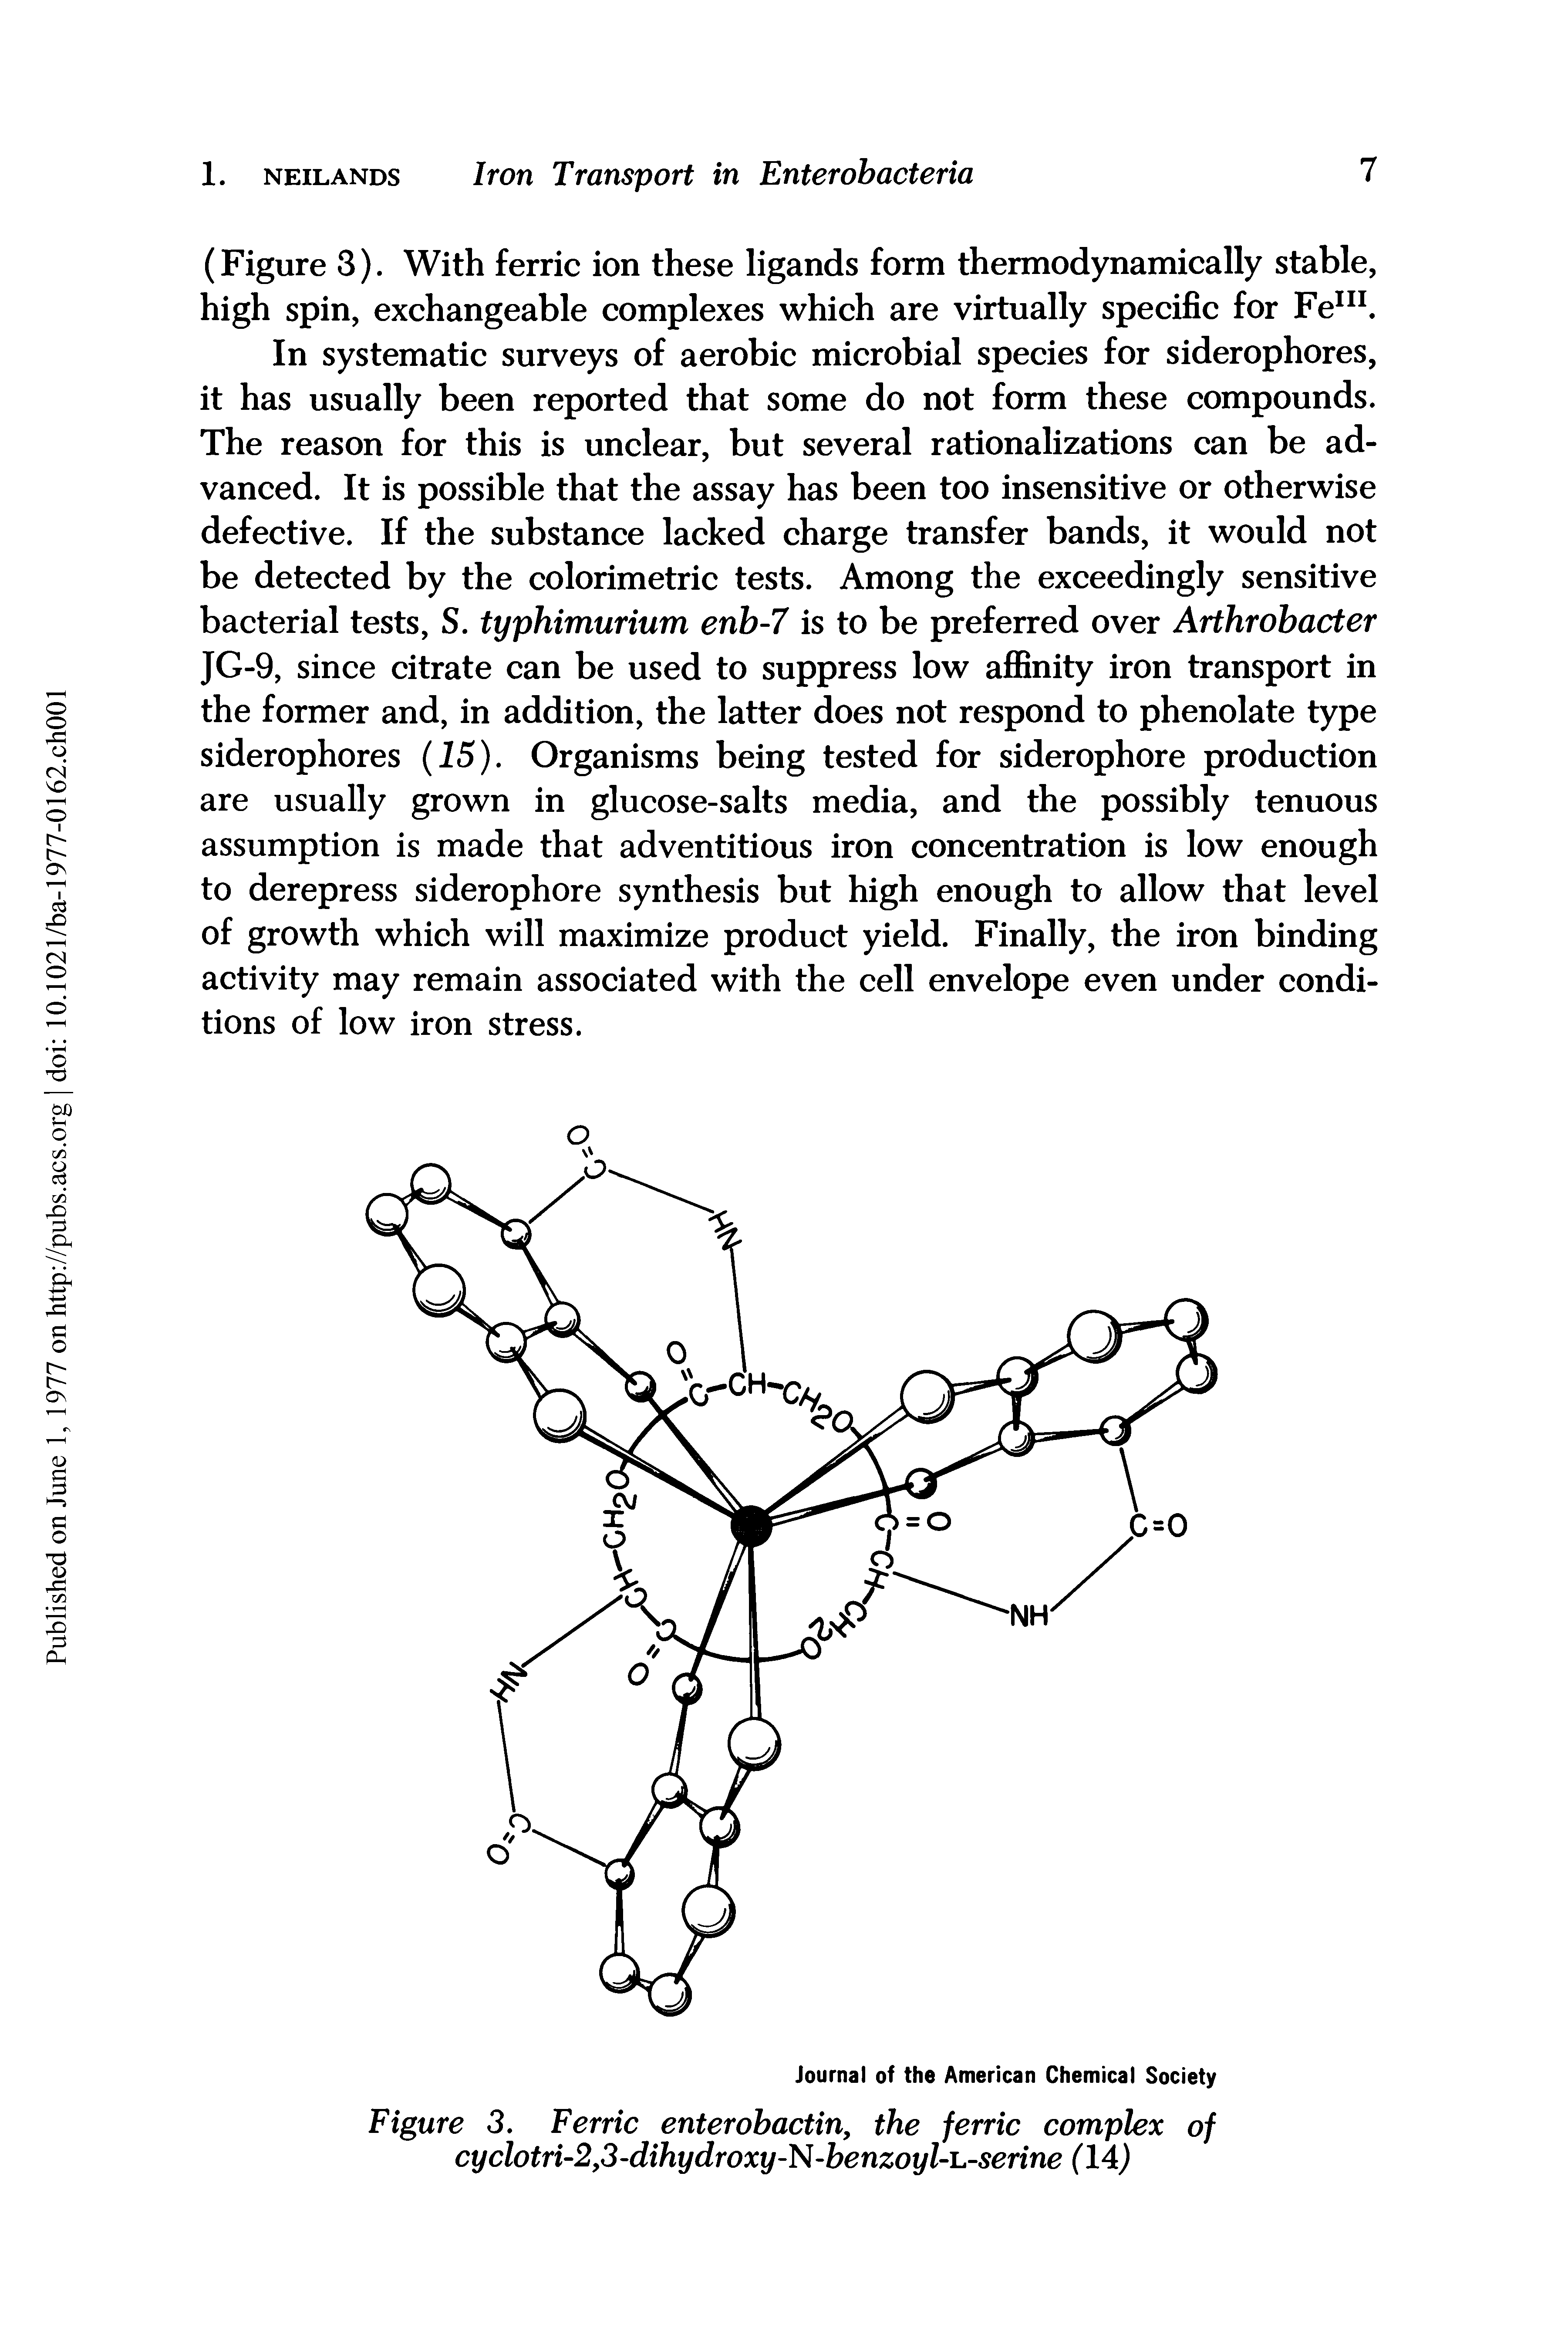 Figure 3. Ferric enterobactin, the ferric complex of cyclotri-2,3-dihydroxy-N-benzoyl-i,-serine (14)...